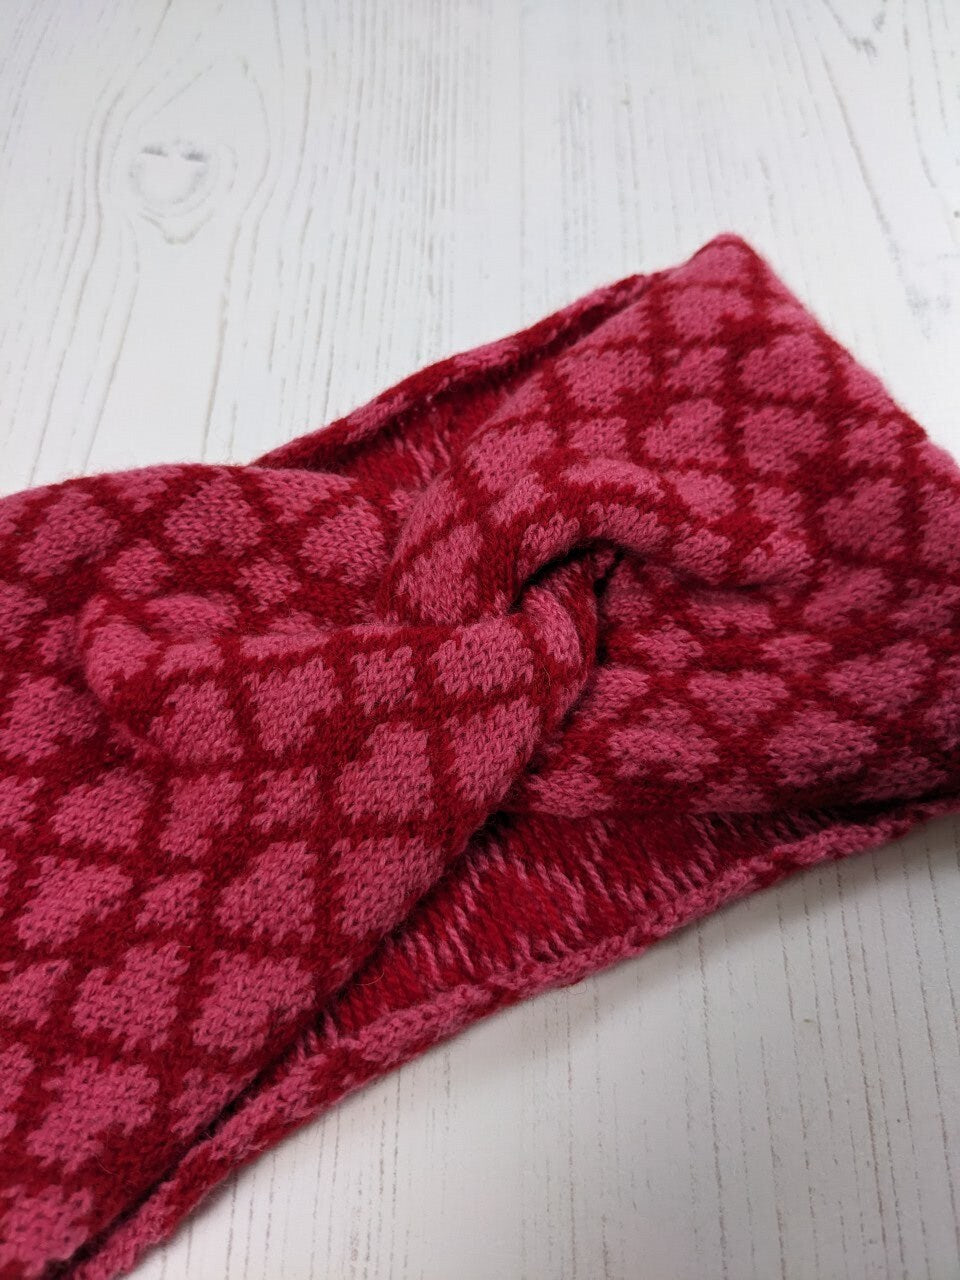 Merino wool ear warmer knitted headband red and pink heart design